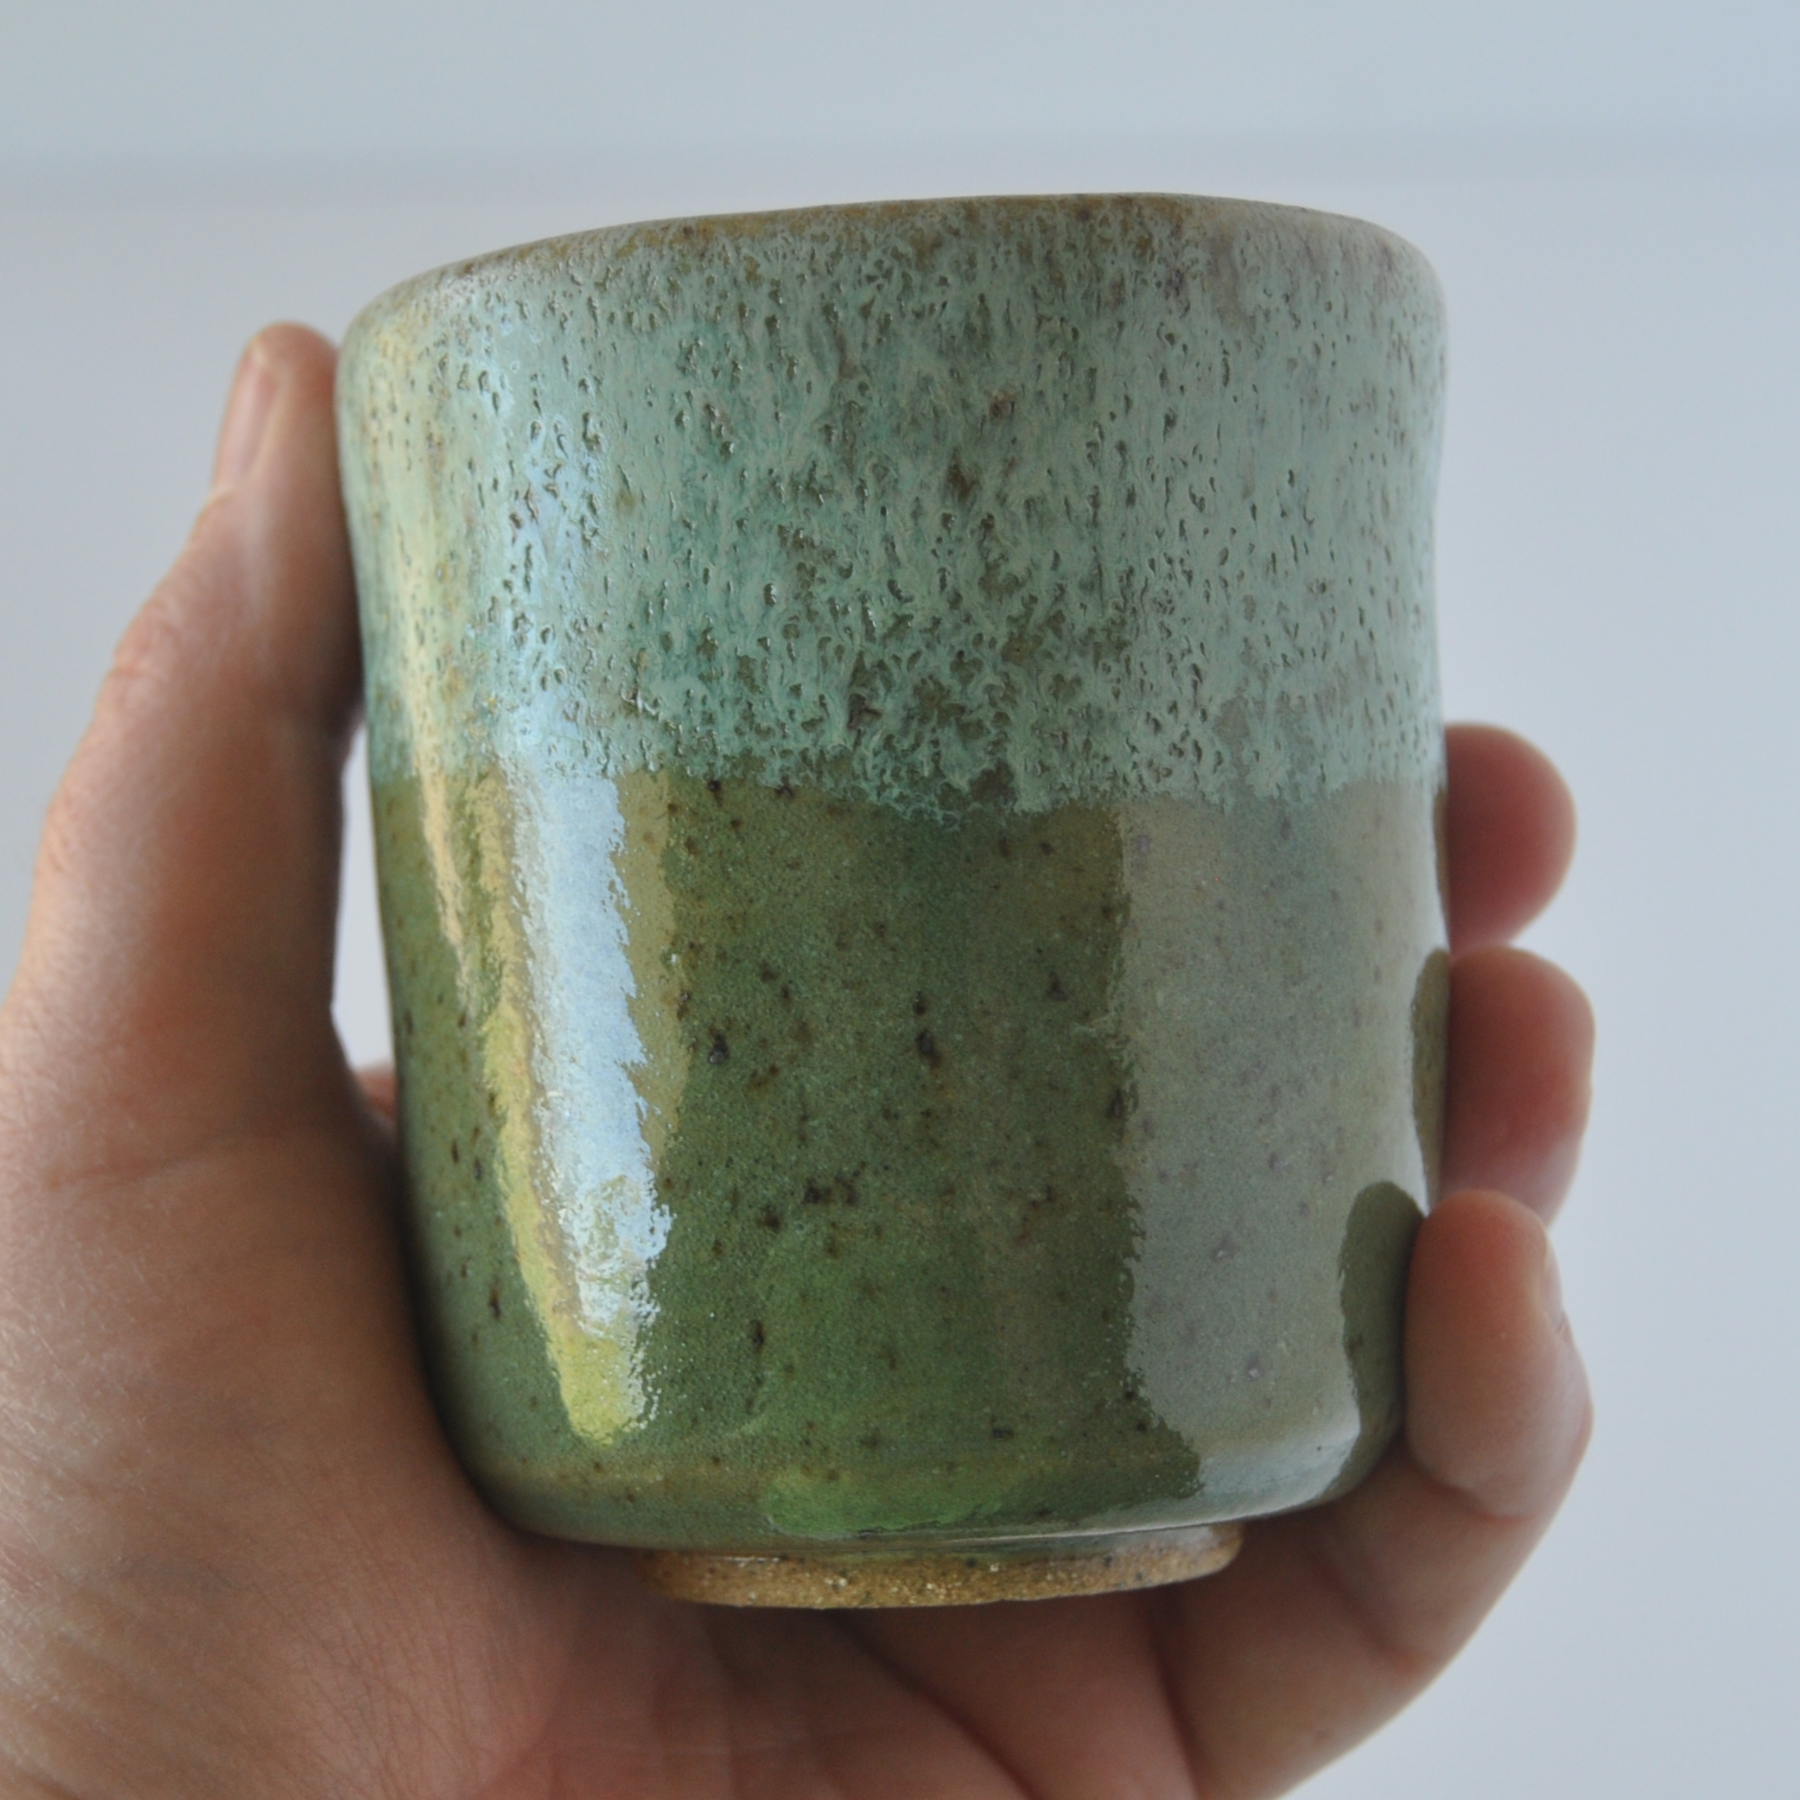 Small ceramic cup